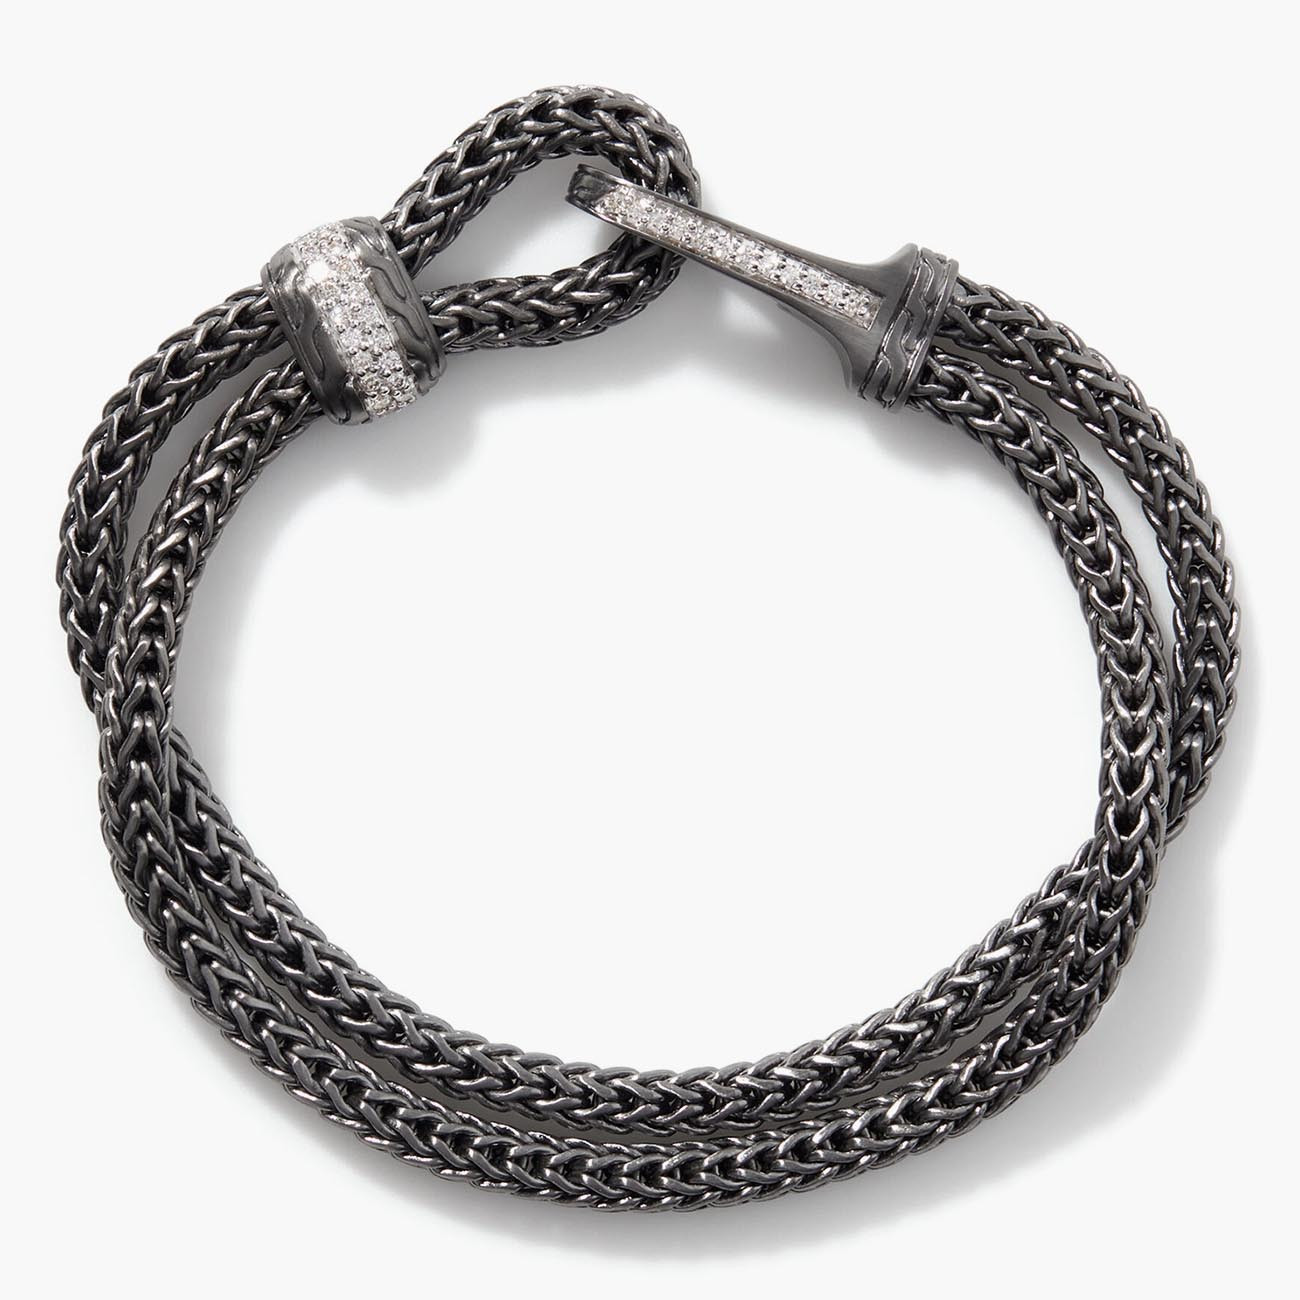 John Hardy Classic Chain Matte Black Station Bracelet with Diamonds profile view